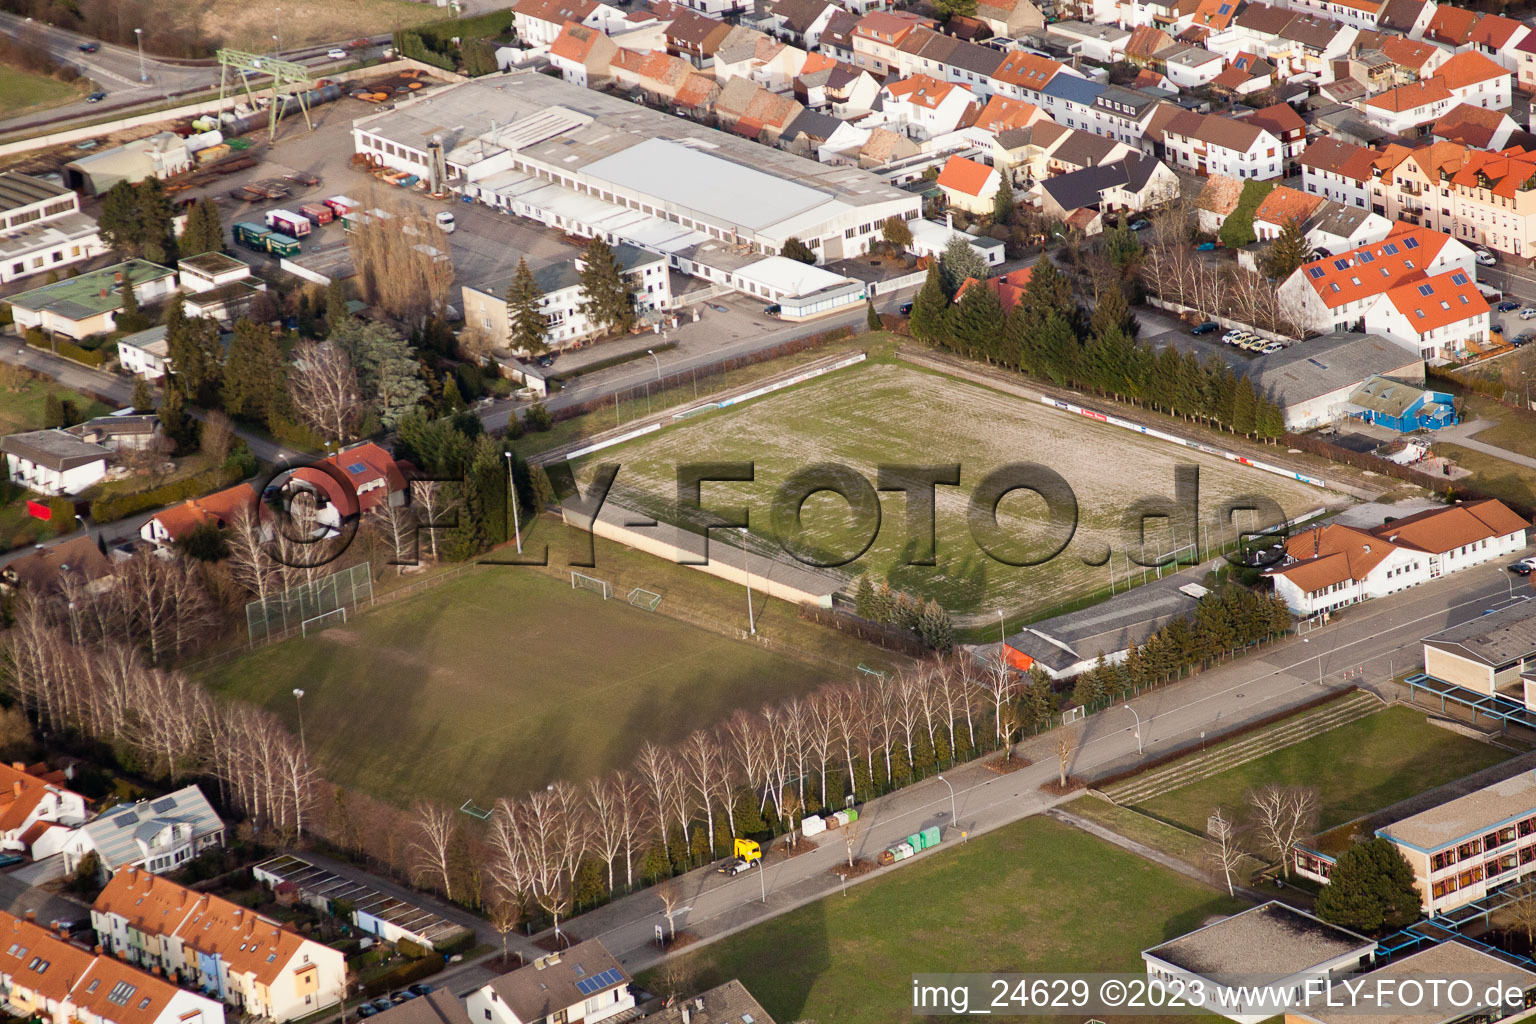 FC Germania sports field in the district Karlsdorf in Karlsdorf-Neuthard in the state Baden-Wuerttemberg, Germany